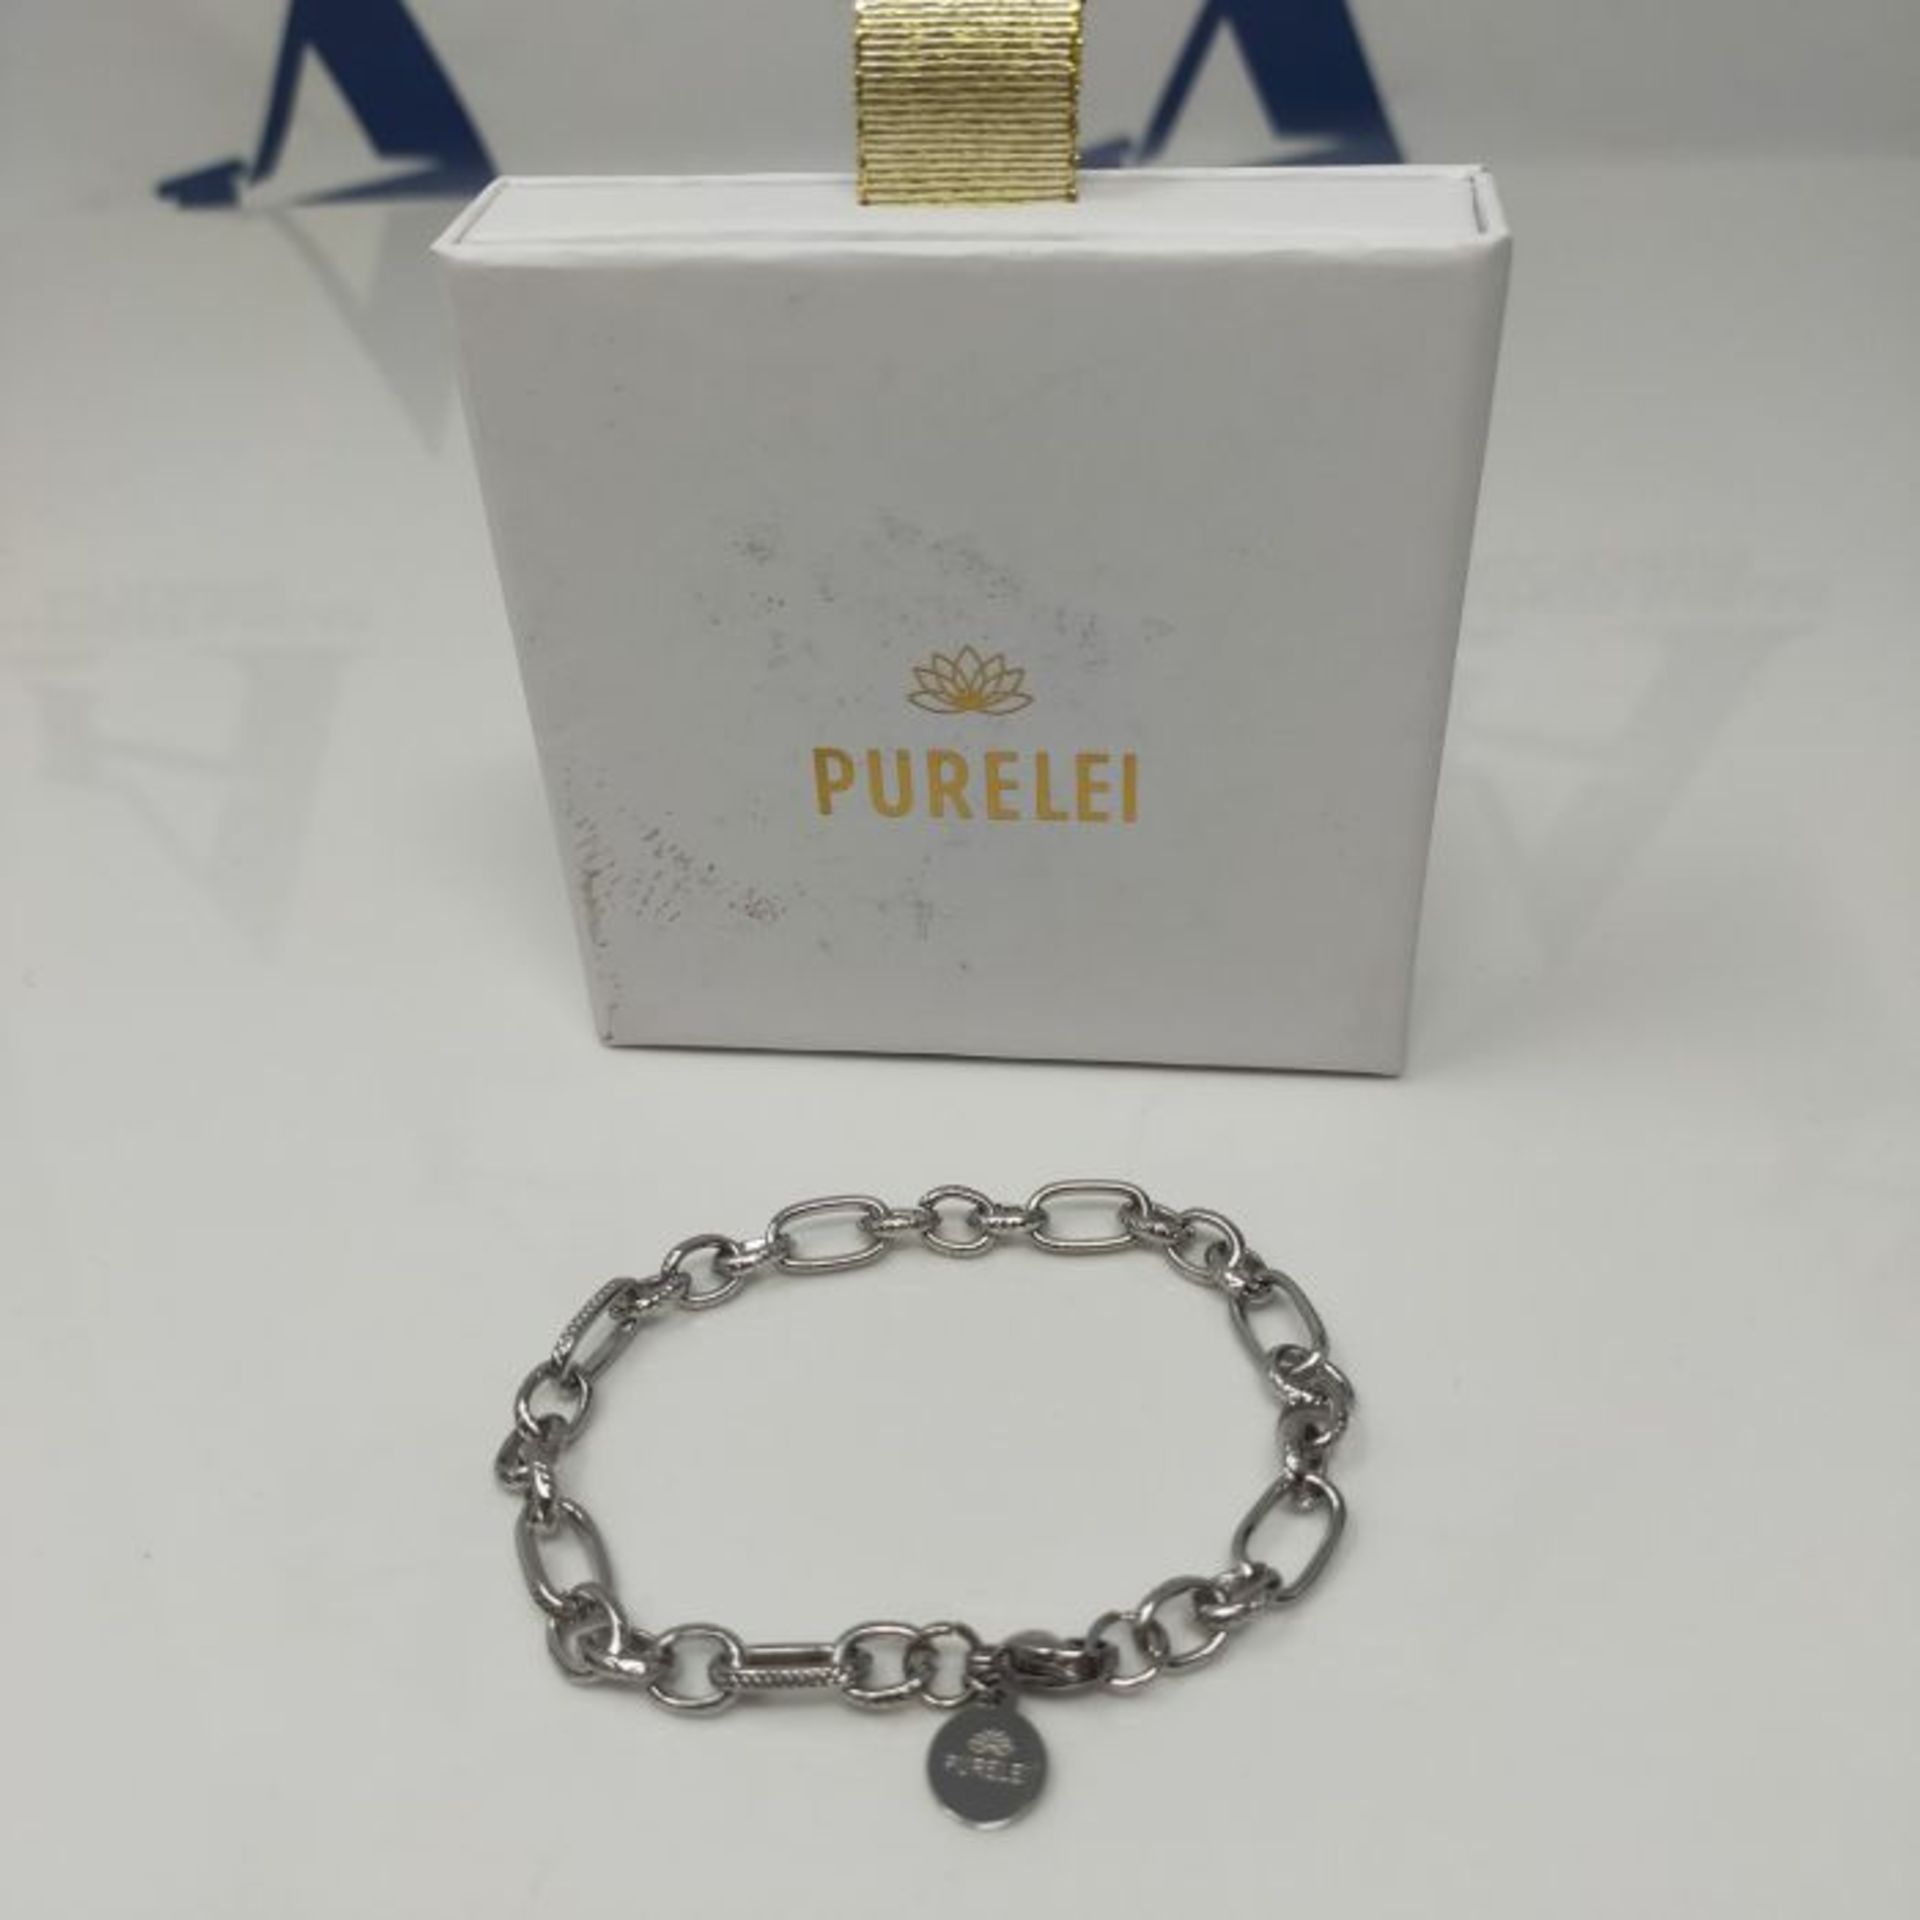 Purelei Fashion Show Bracelet (Silver) - Image 2 of 3